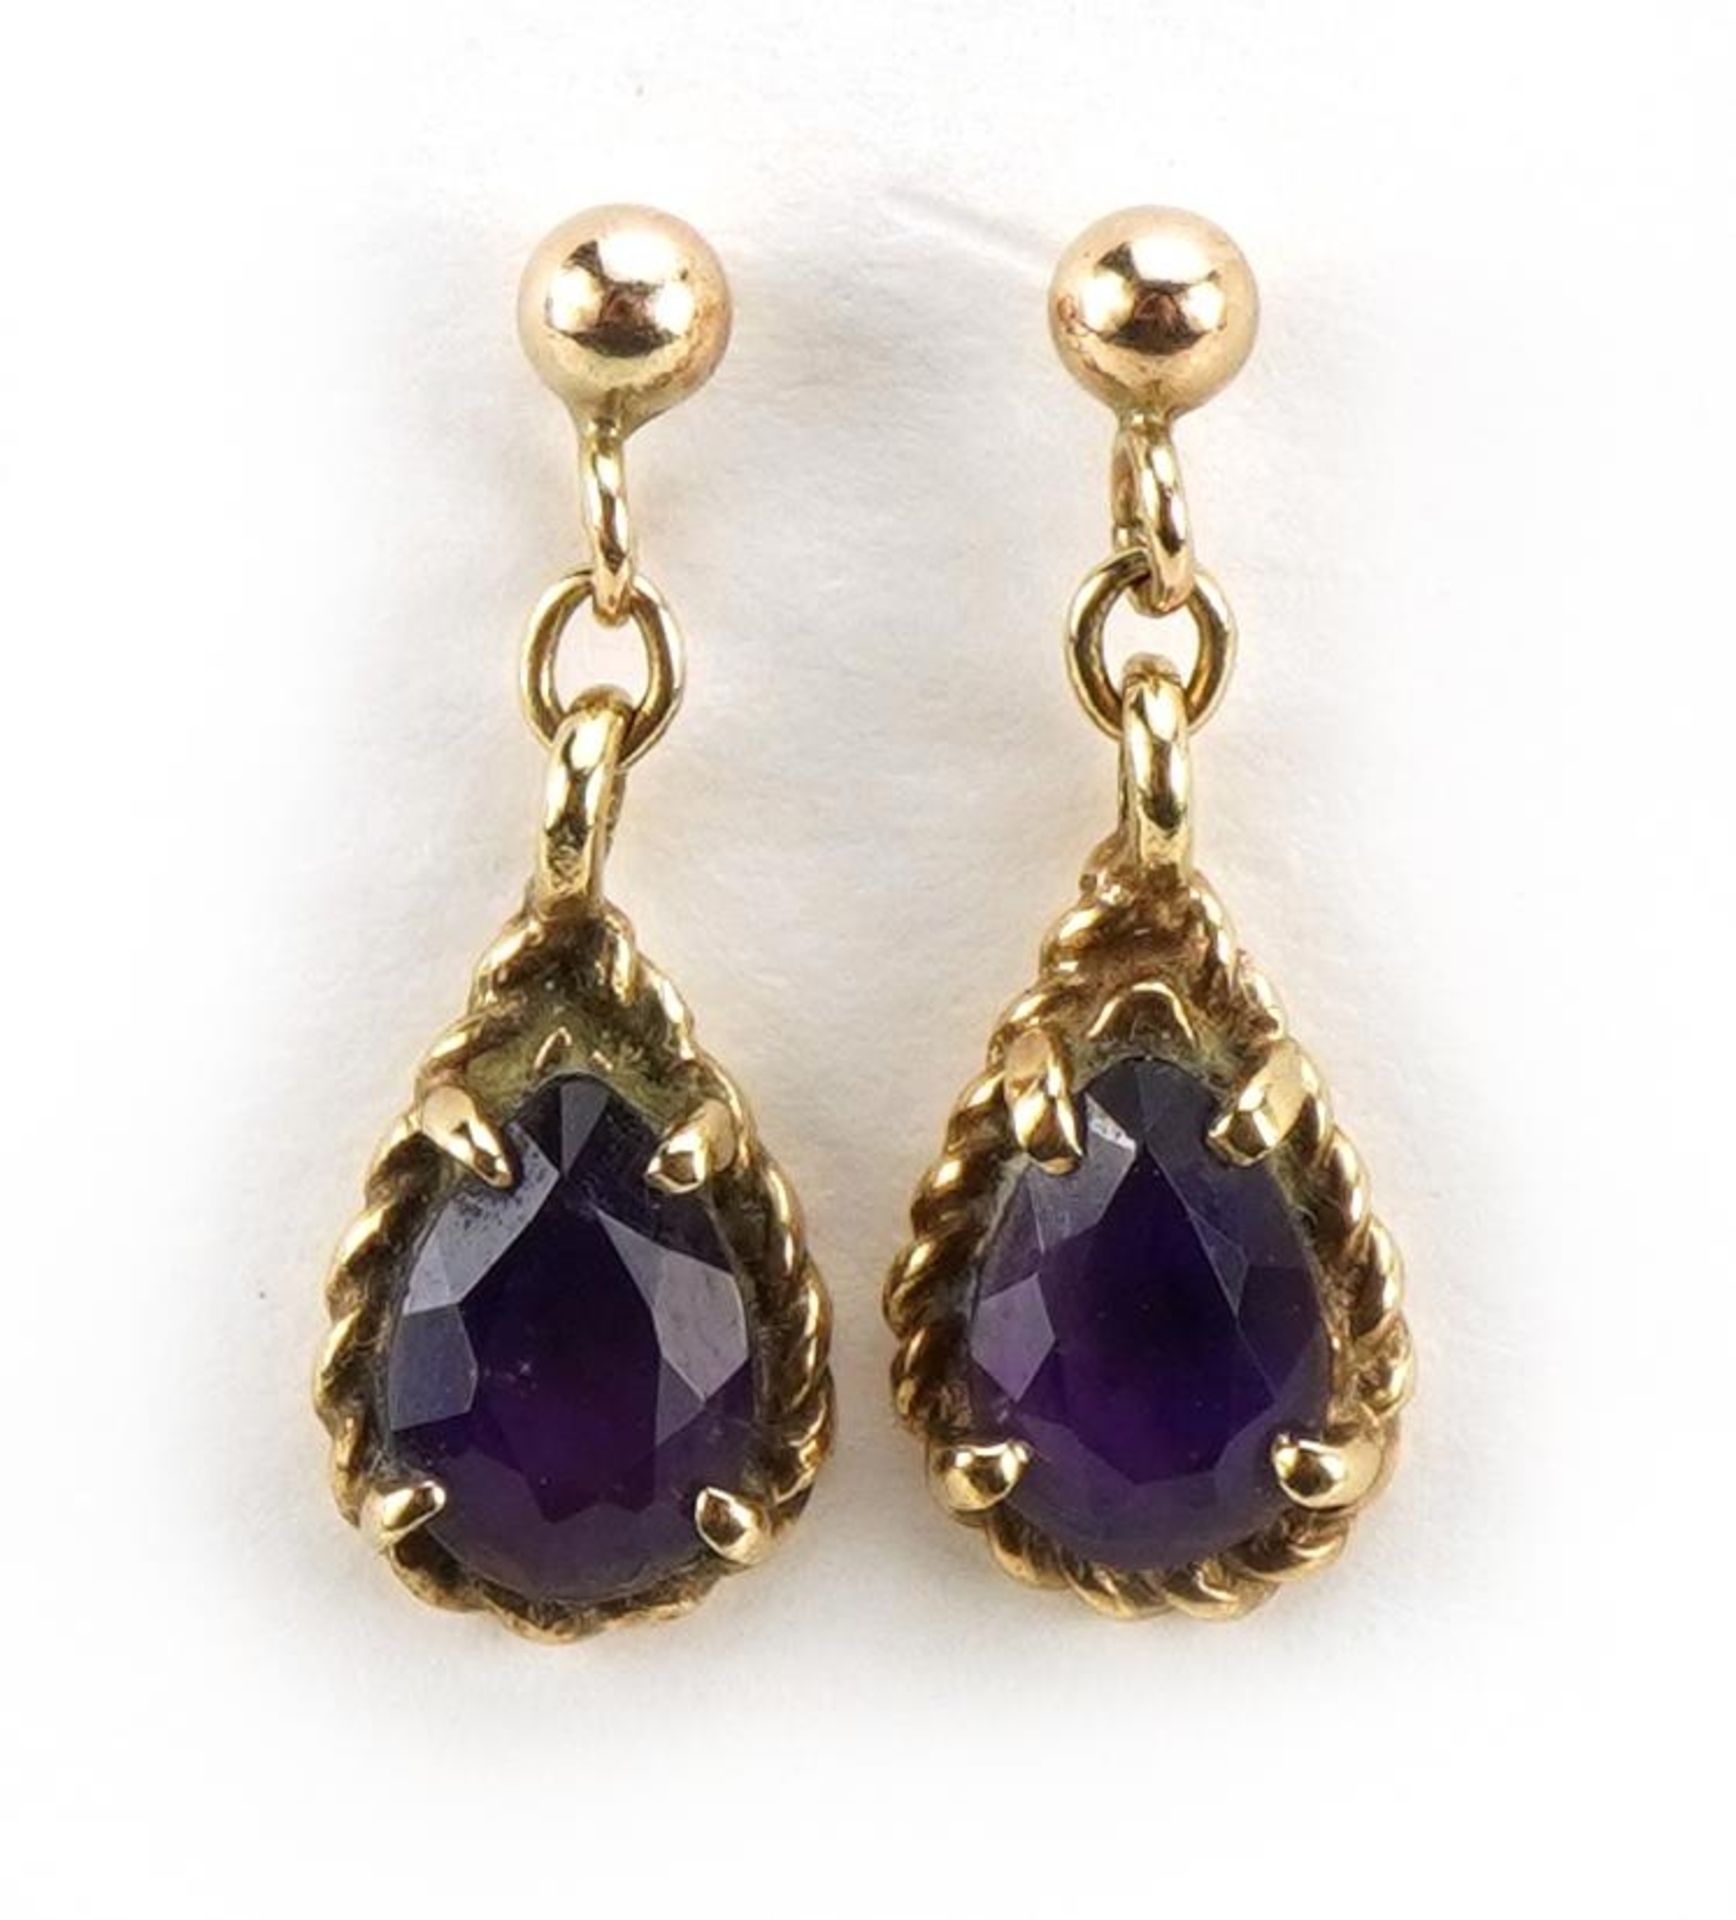 Pair of unmarked 9ct gold amethyst tear drop earrings, 1.6cm high, 1.3g